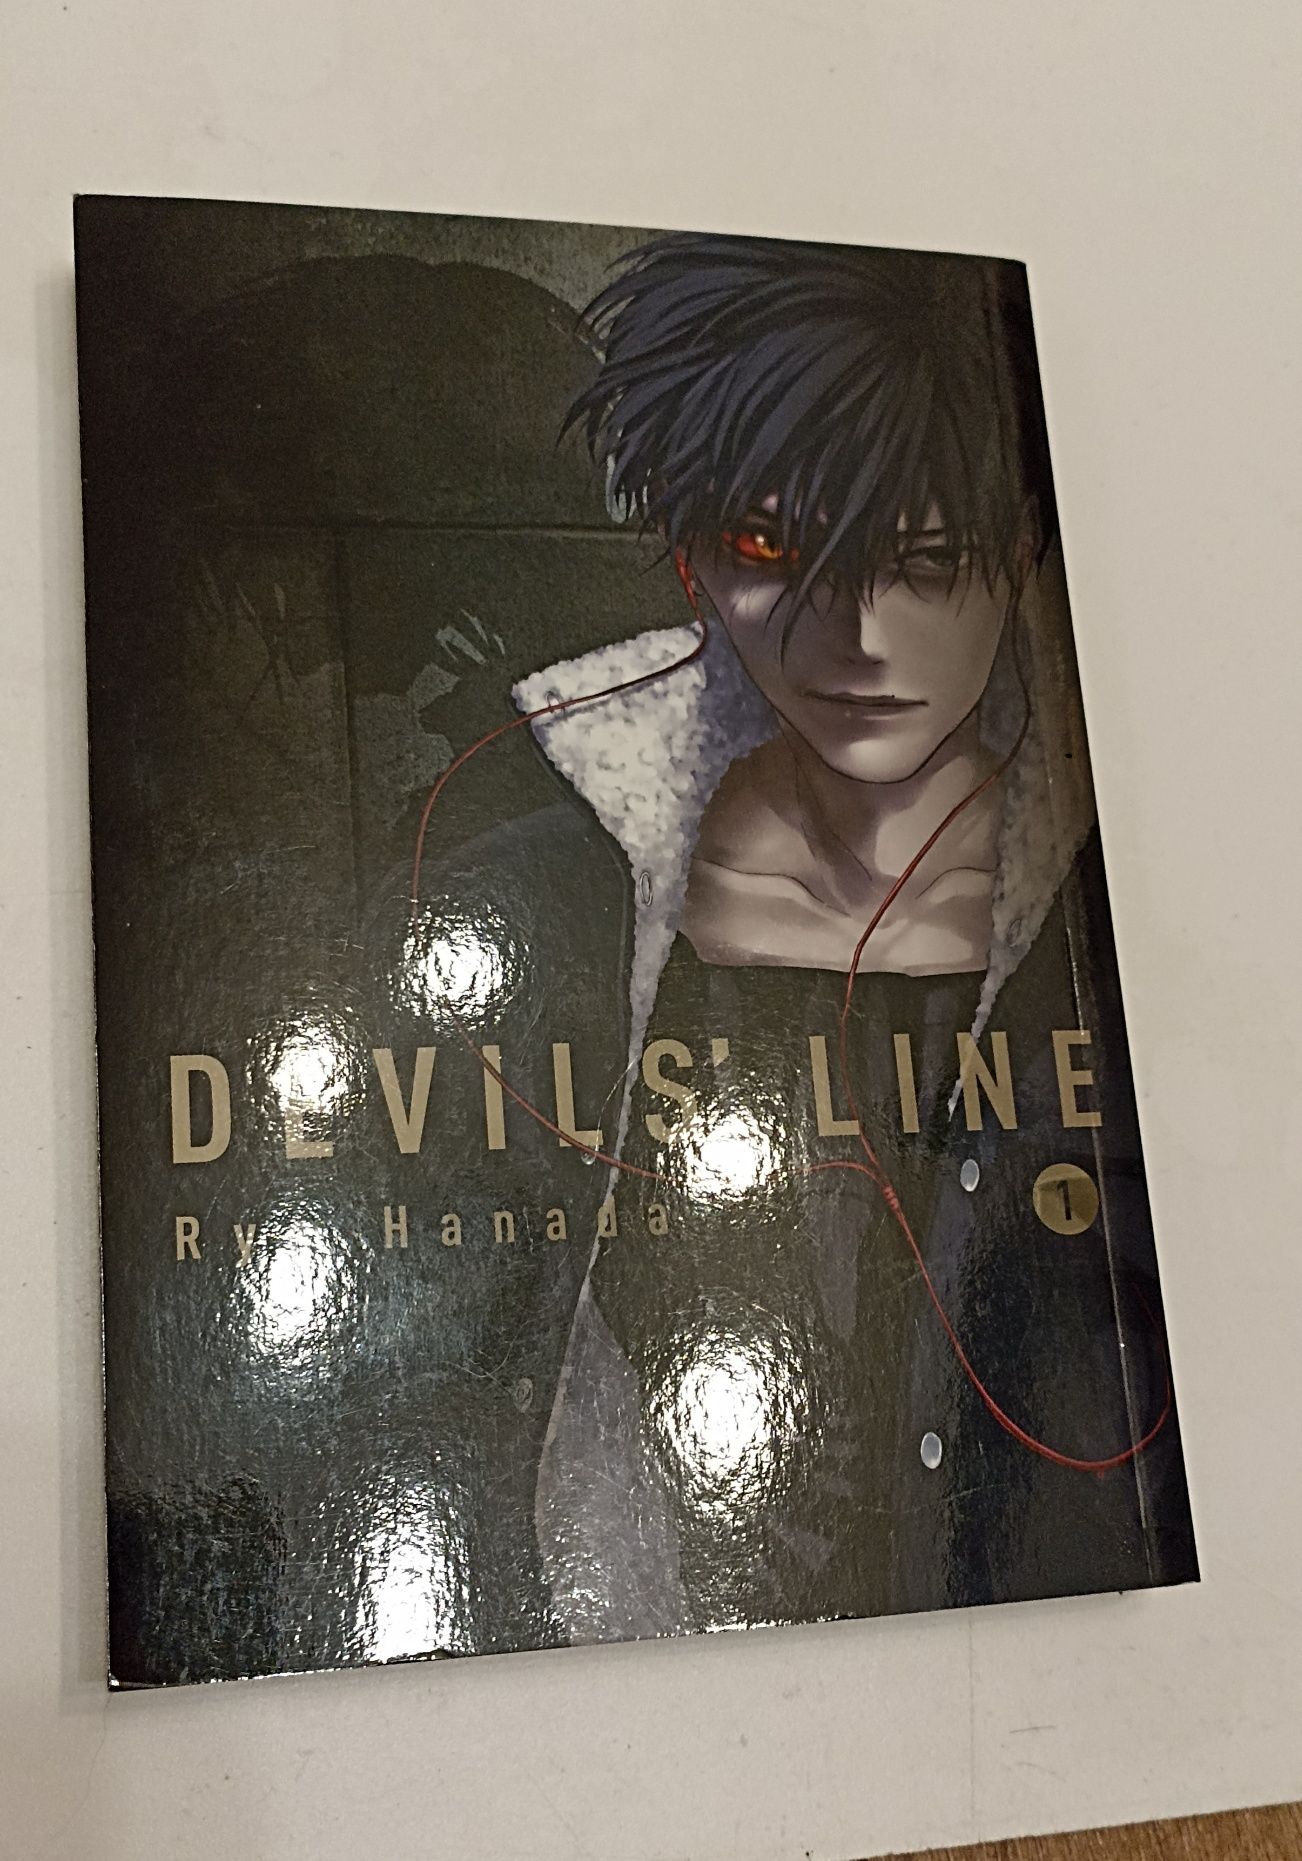 Tokyo ghoul, devil's line, Splatoon manga